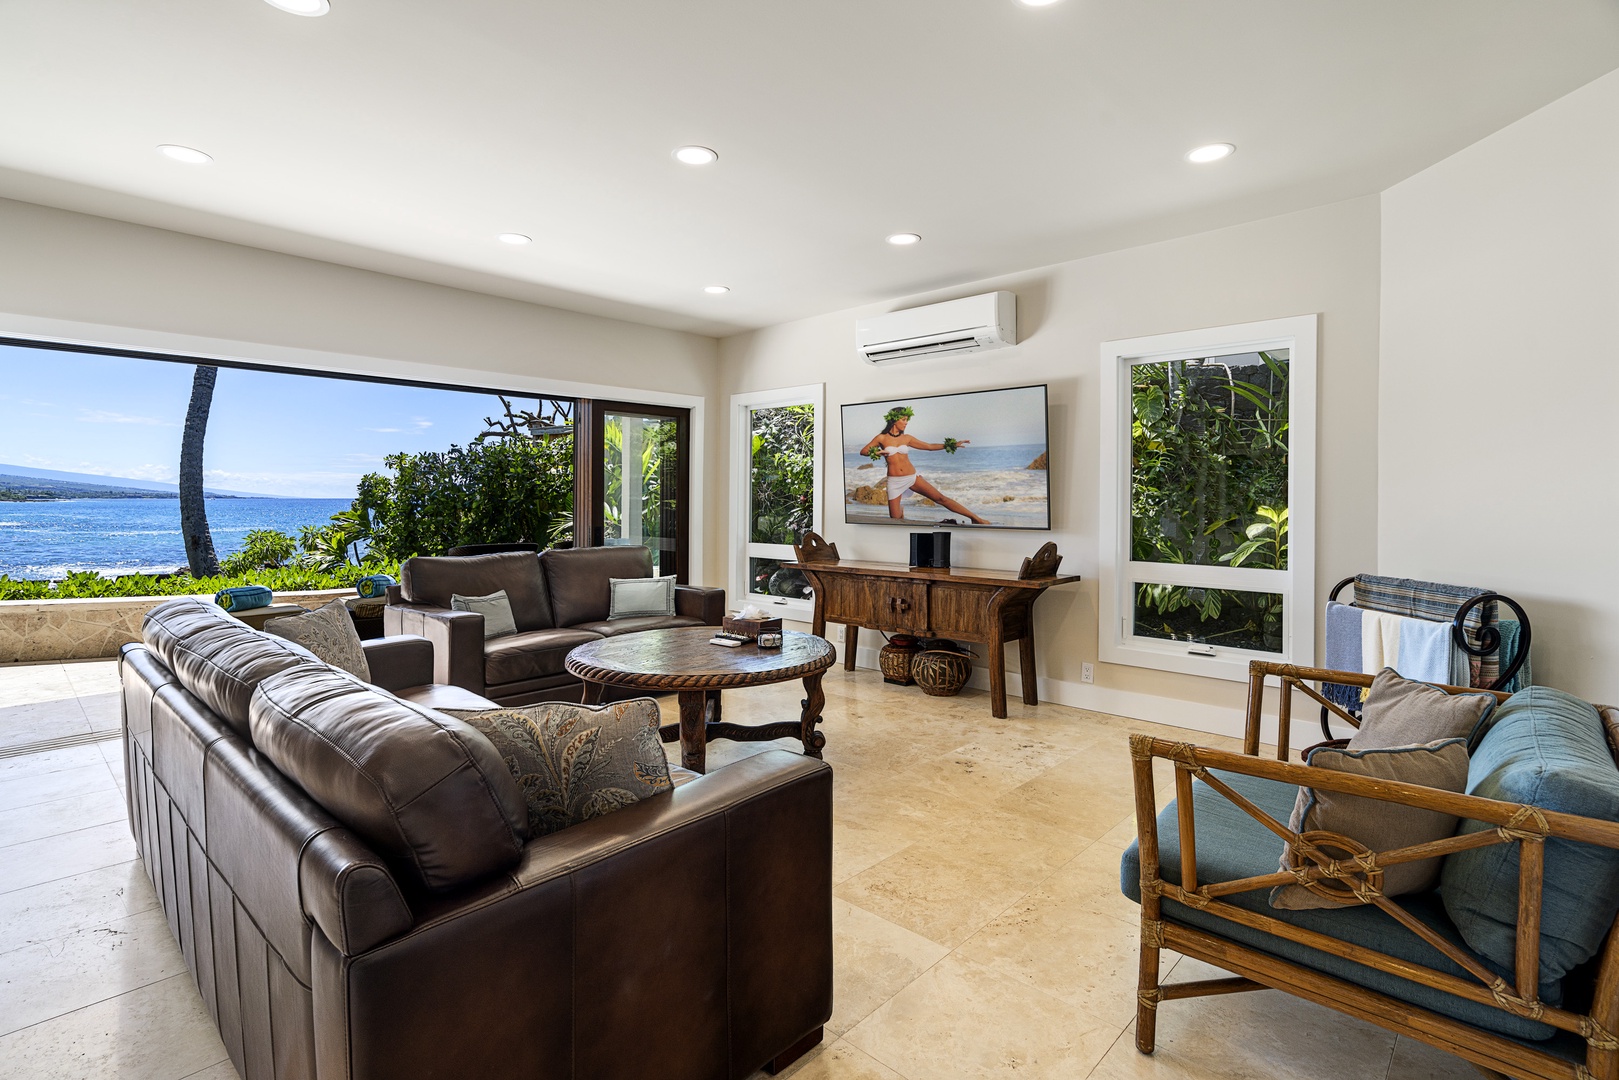 Kailua Kona Vacation Rentals, Ali'i Point #7 - Amazing Ocean Views living room